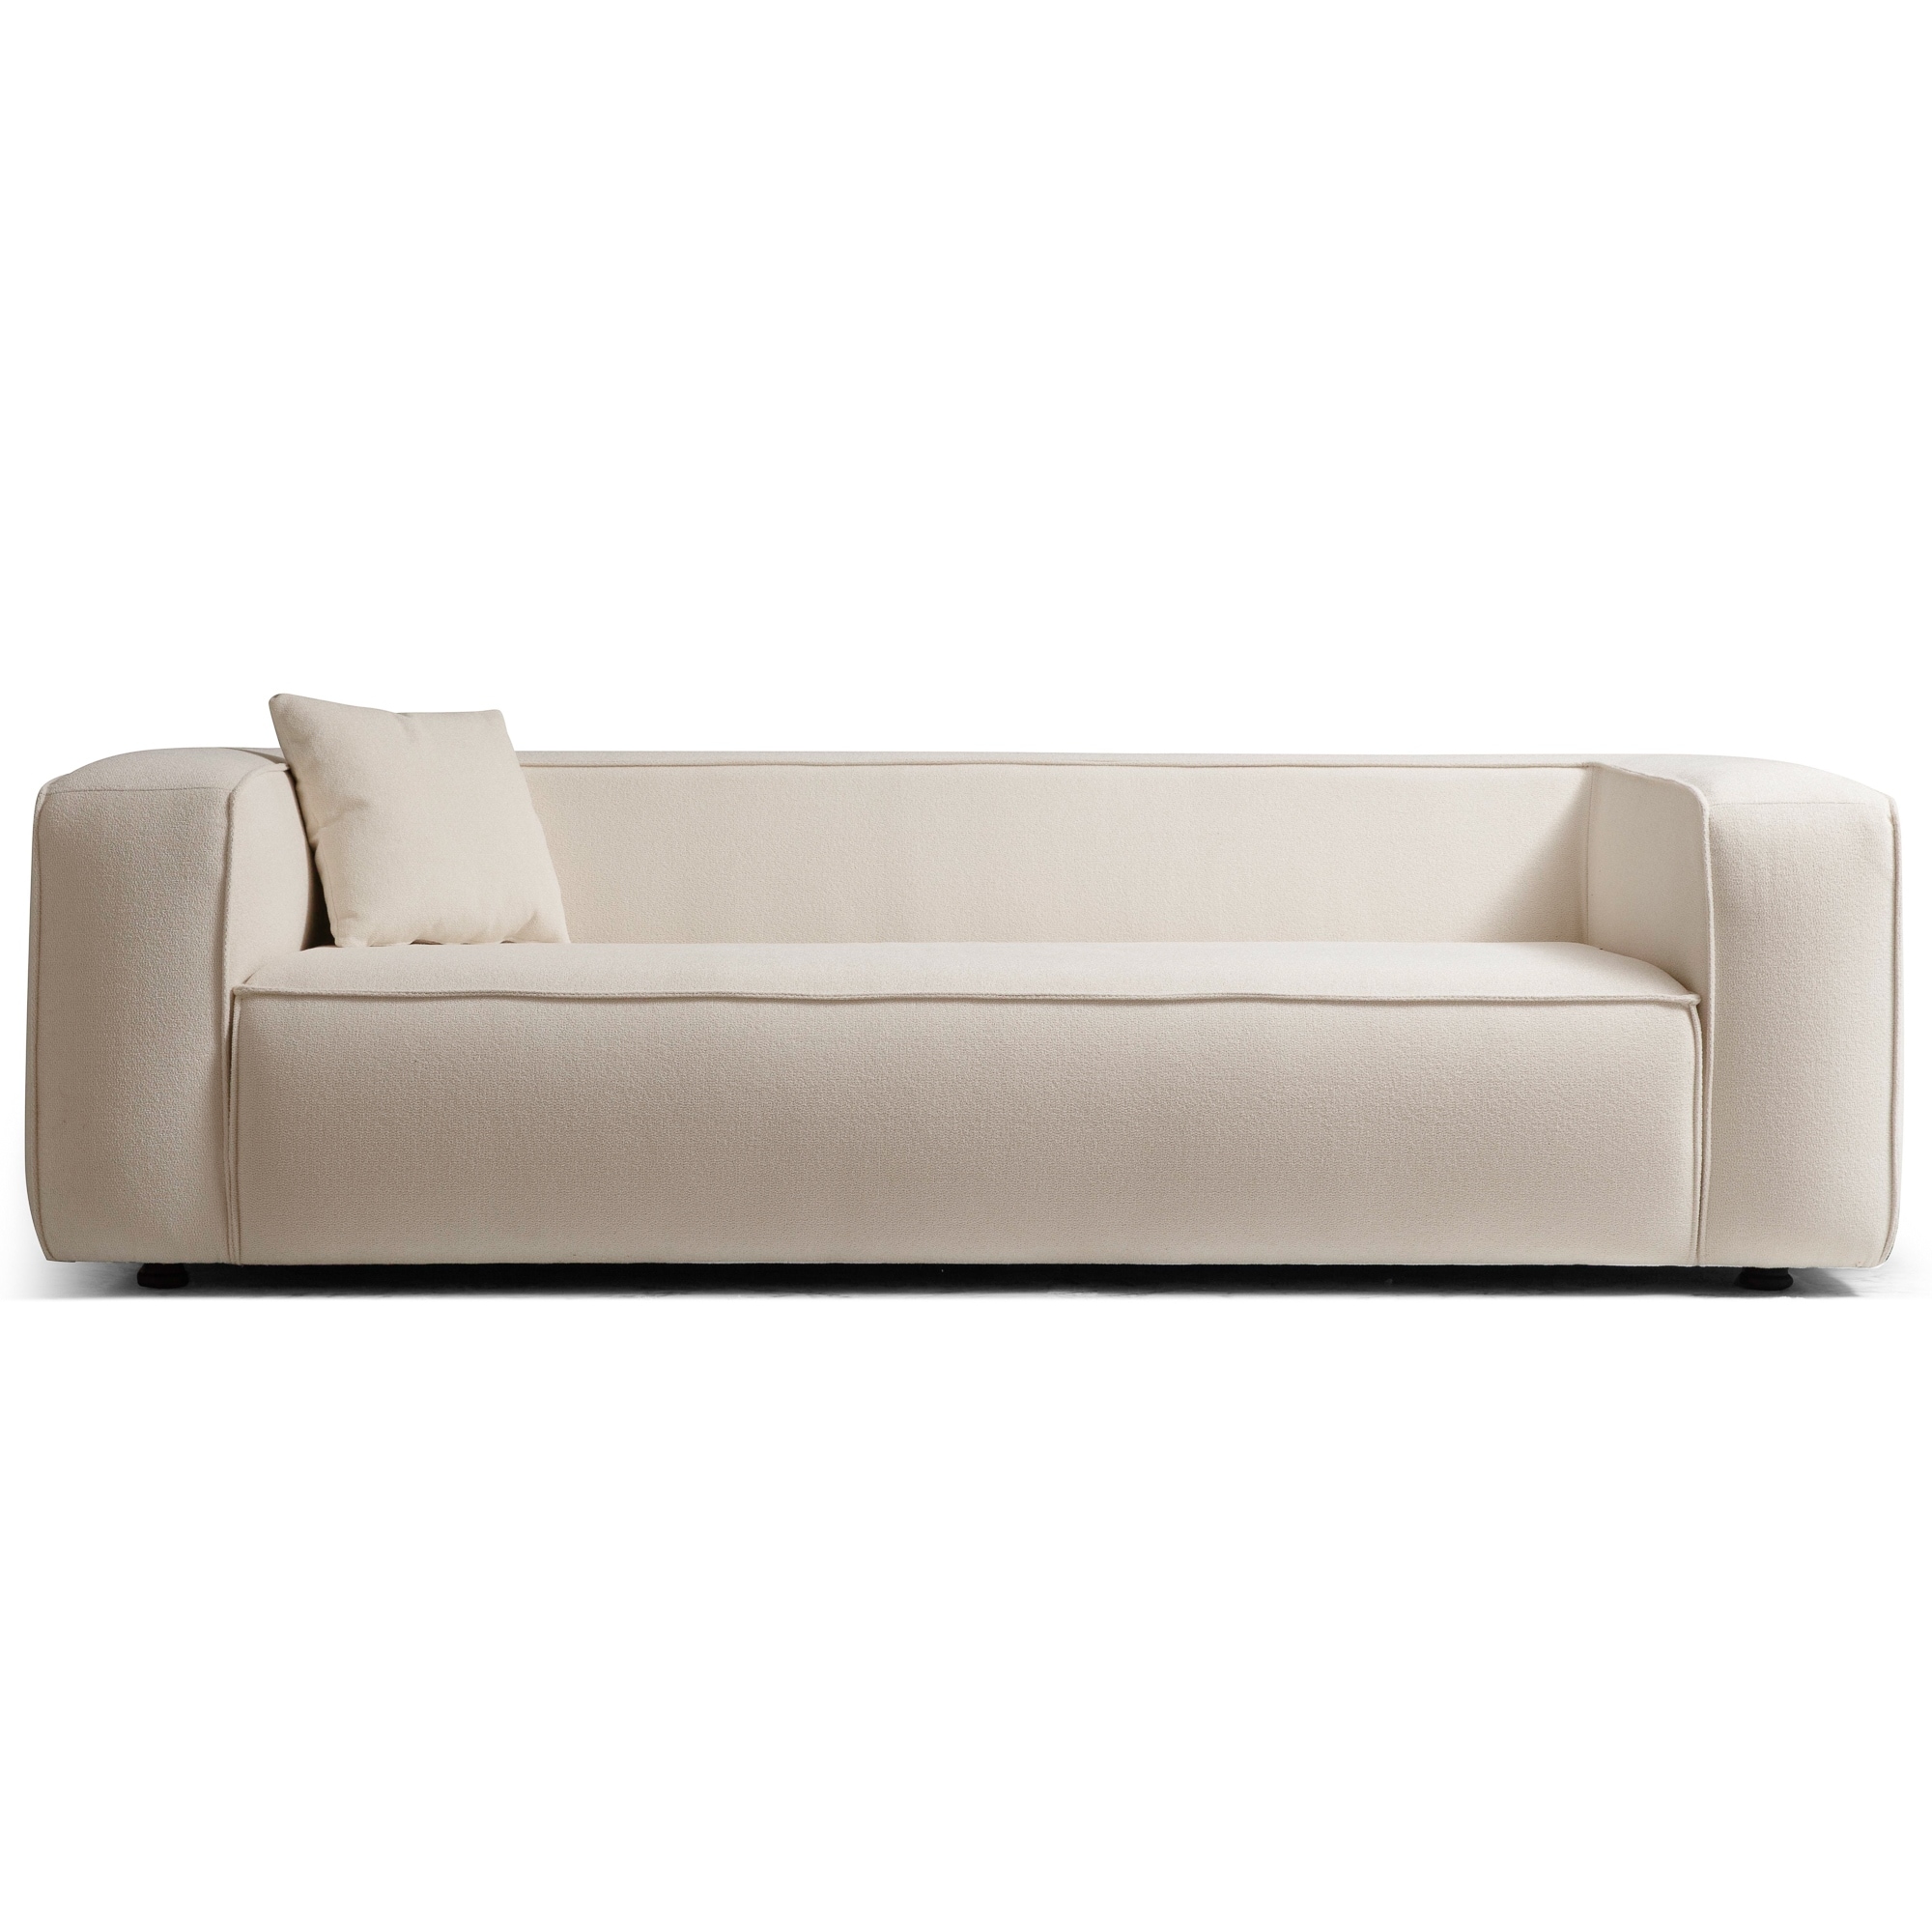 Ashcroft Belinda Mid-Century Modern Upholstered Tight Back French Boucle Sofa